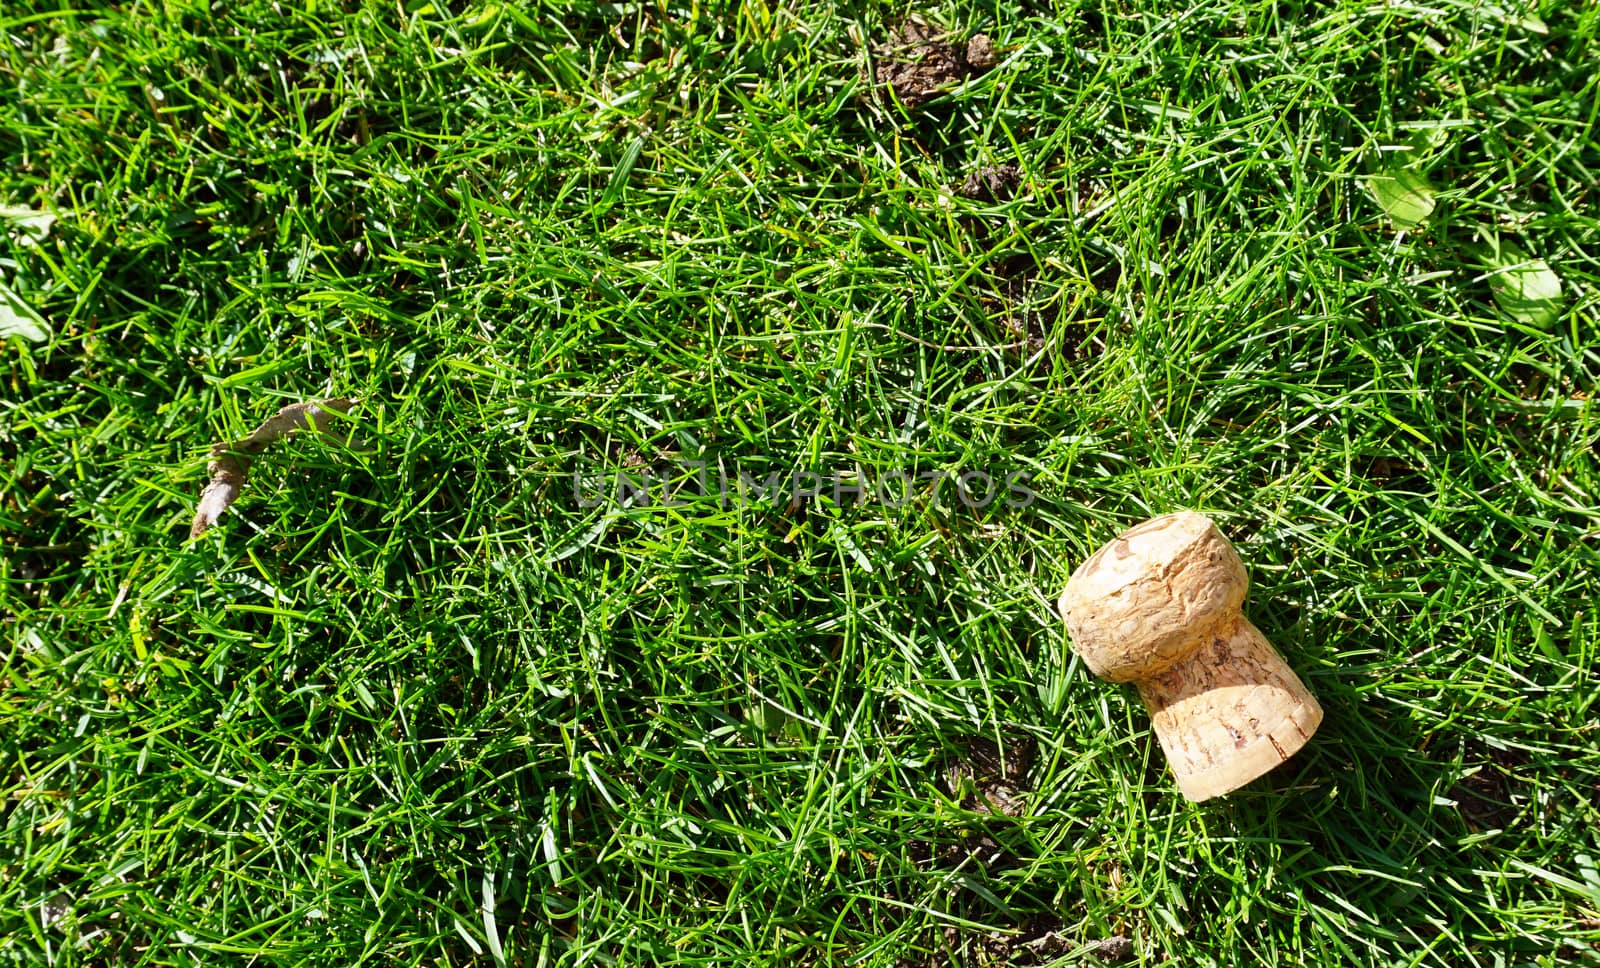 cork object on the grass field